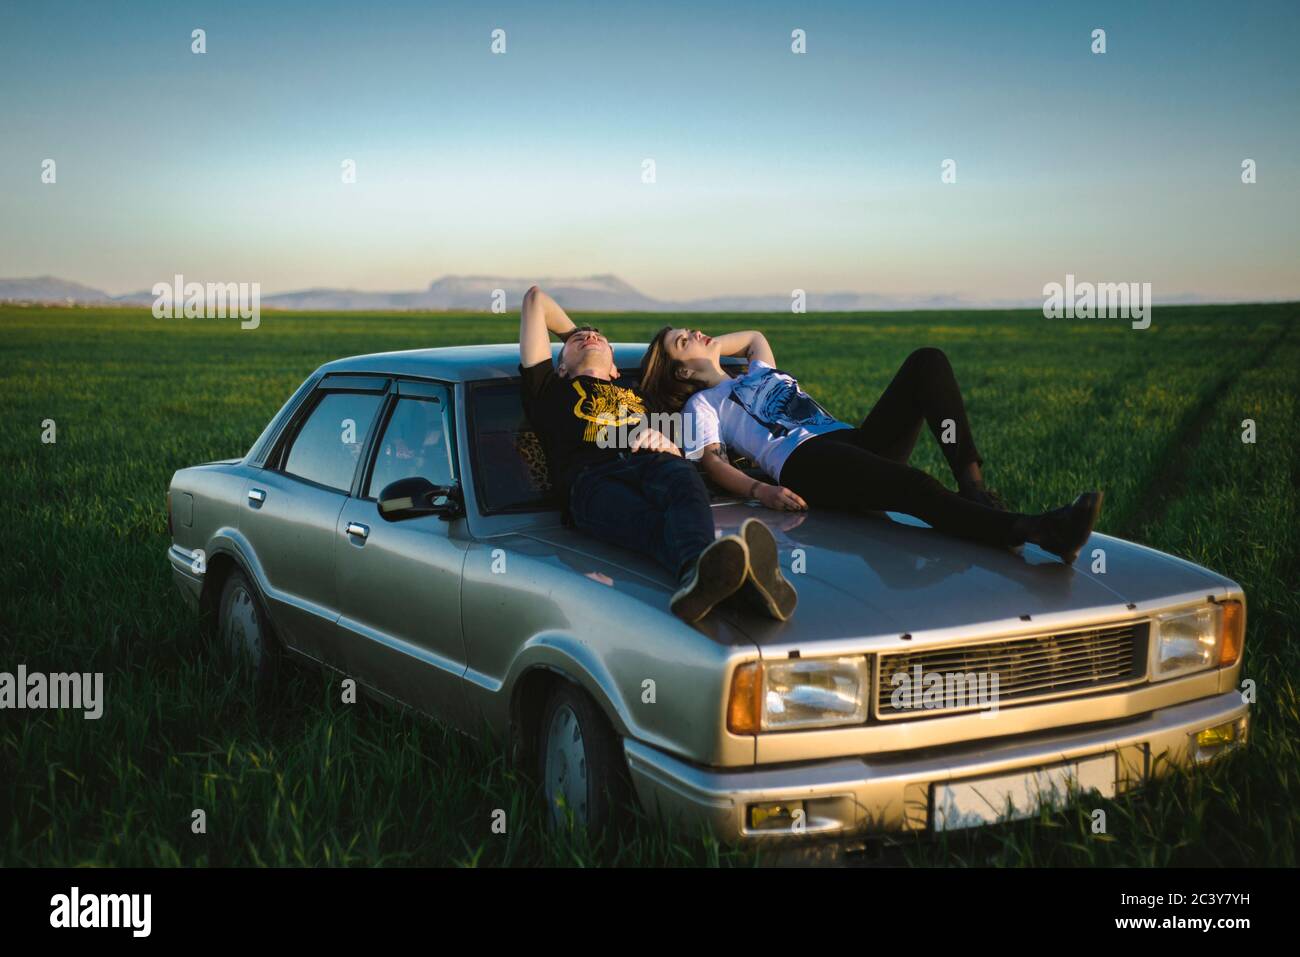 Ukraine, Crimea, Couple sitting on old fashioned car in rural scenery Stock Photo